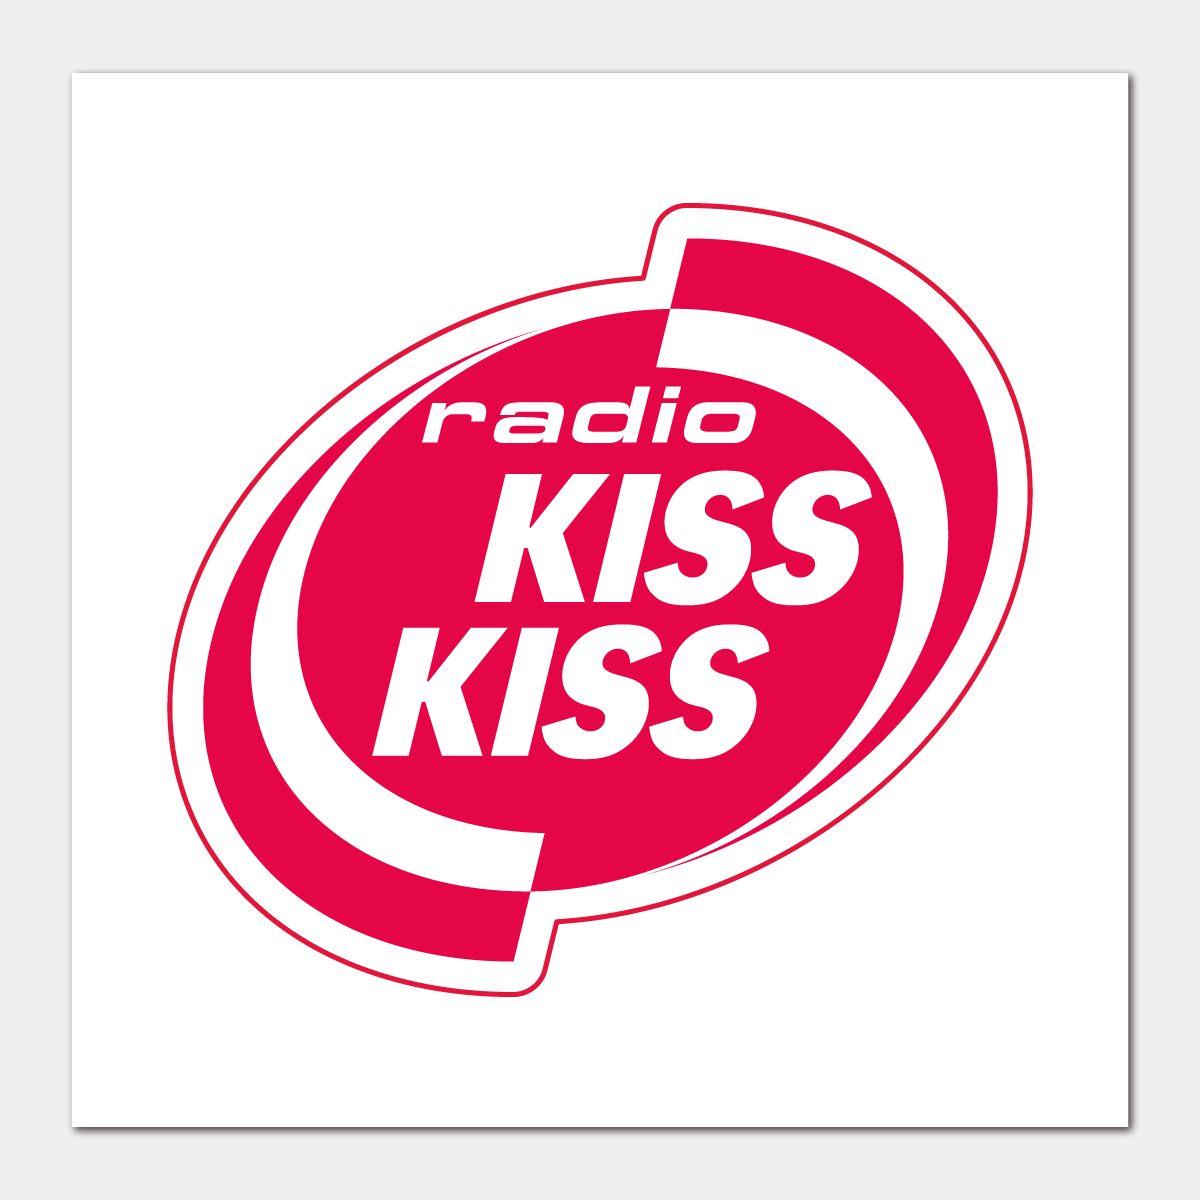 %luca.fruzza/visual.designerRadio Kiss Kiss   Logotype